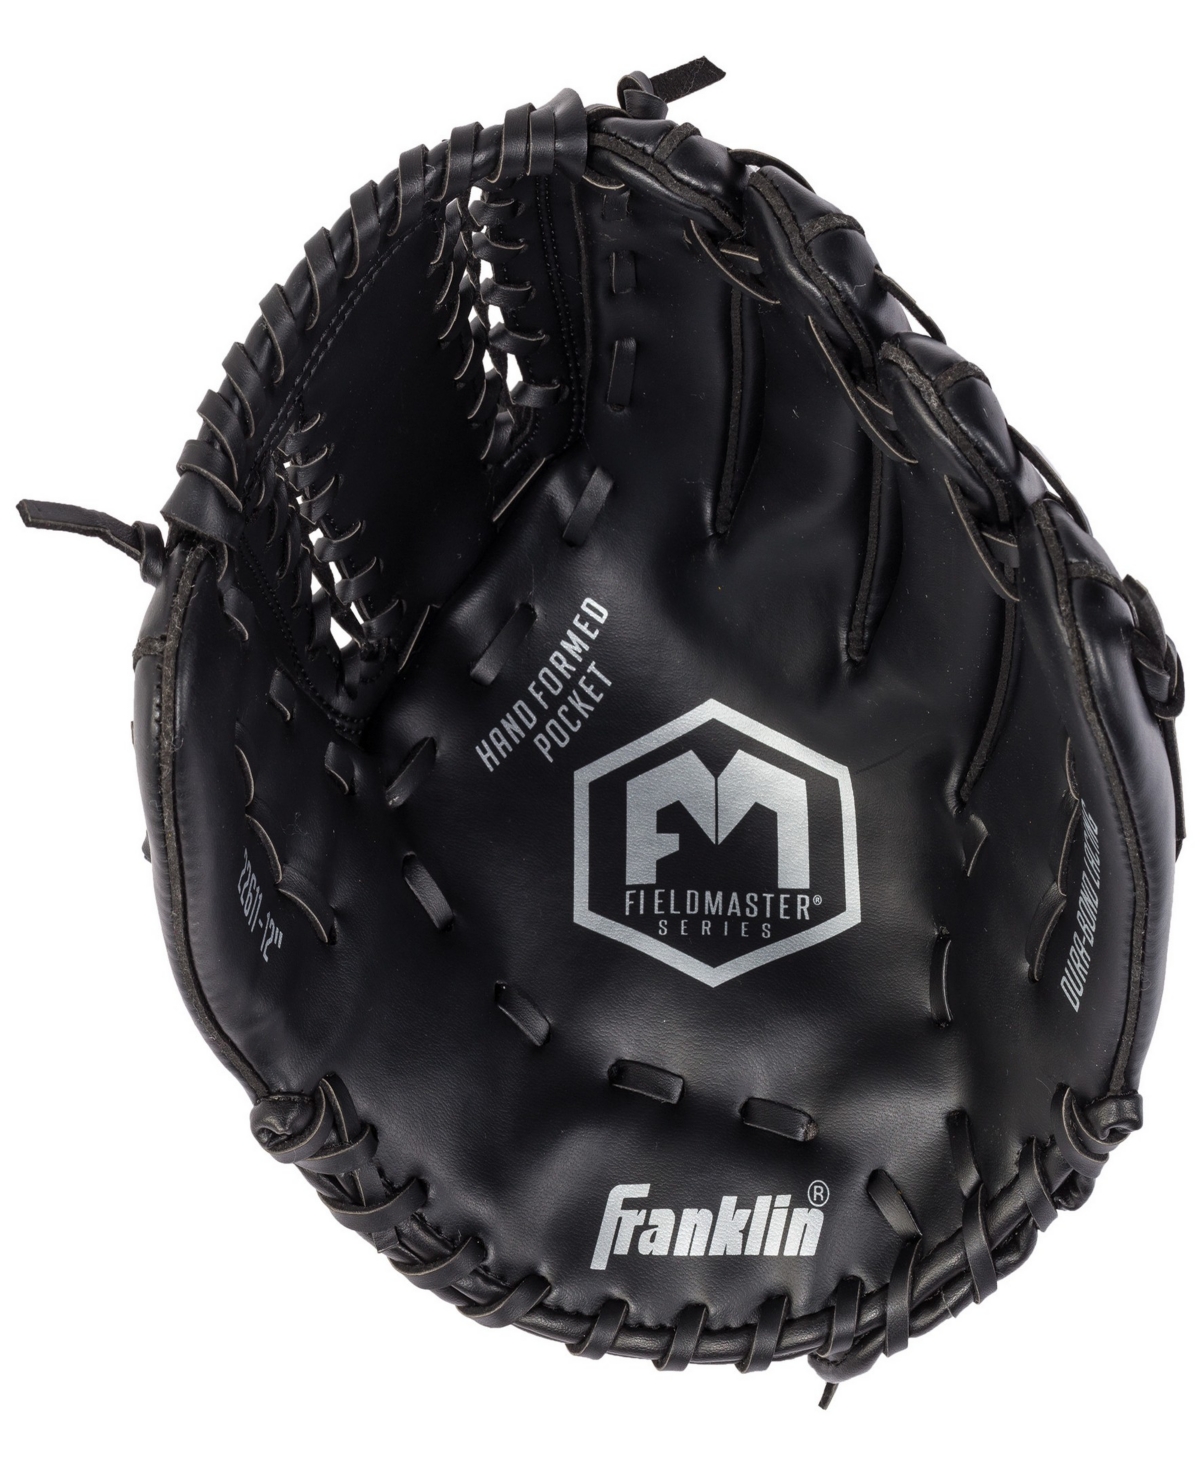 Field Master Midnight Series 12.0" Baseball Glove - Right Handed Thrower - Black